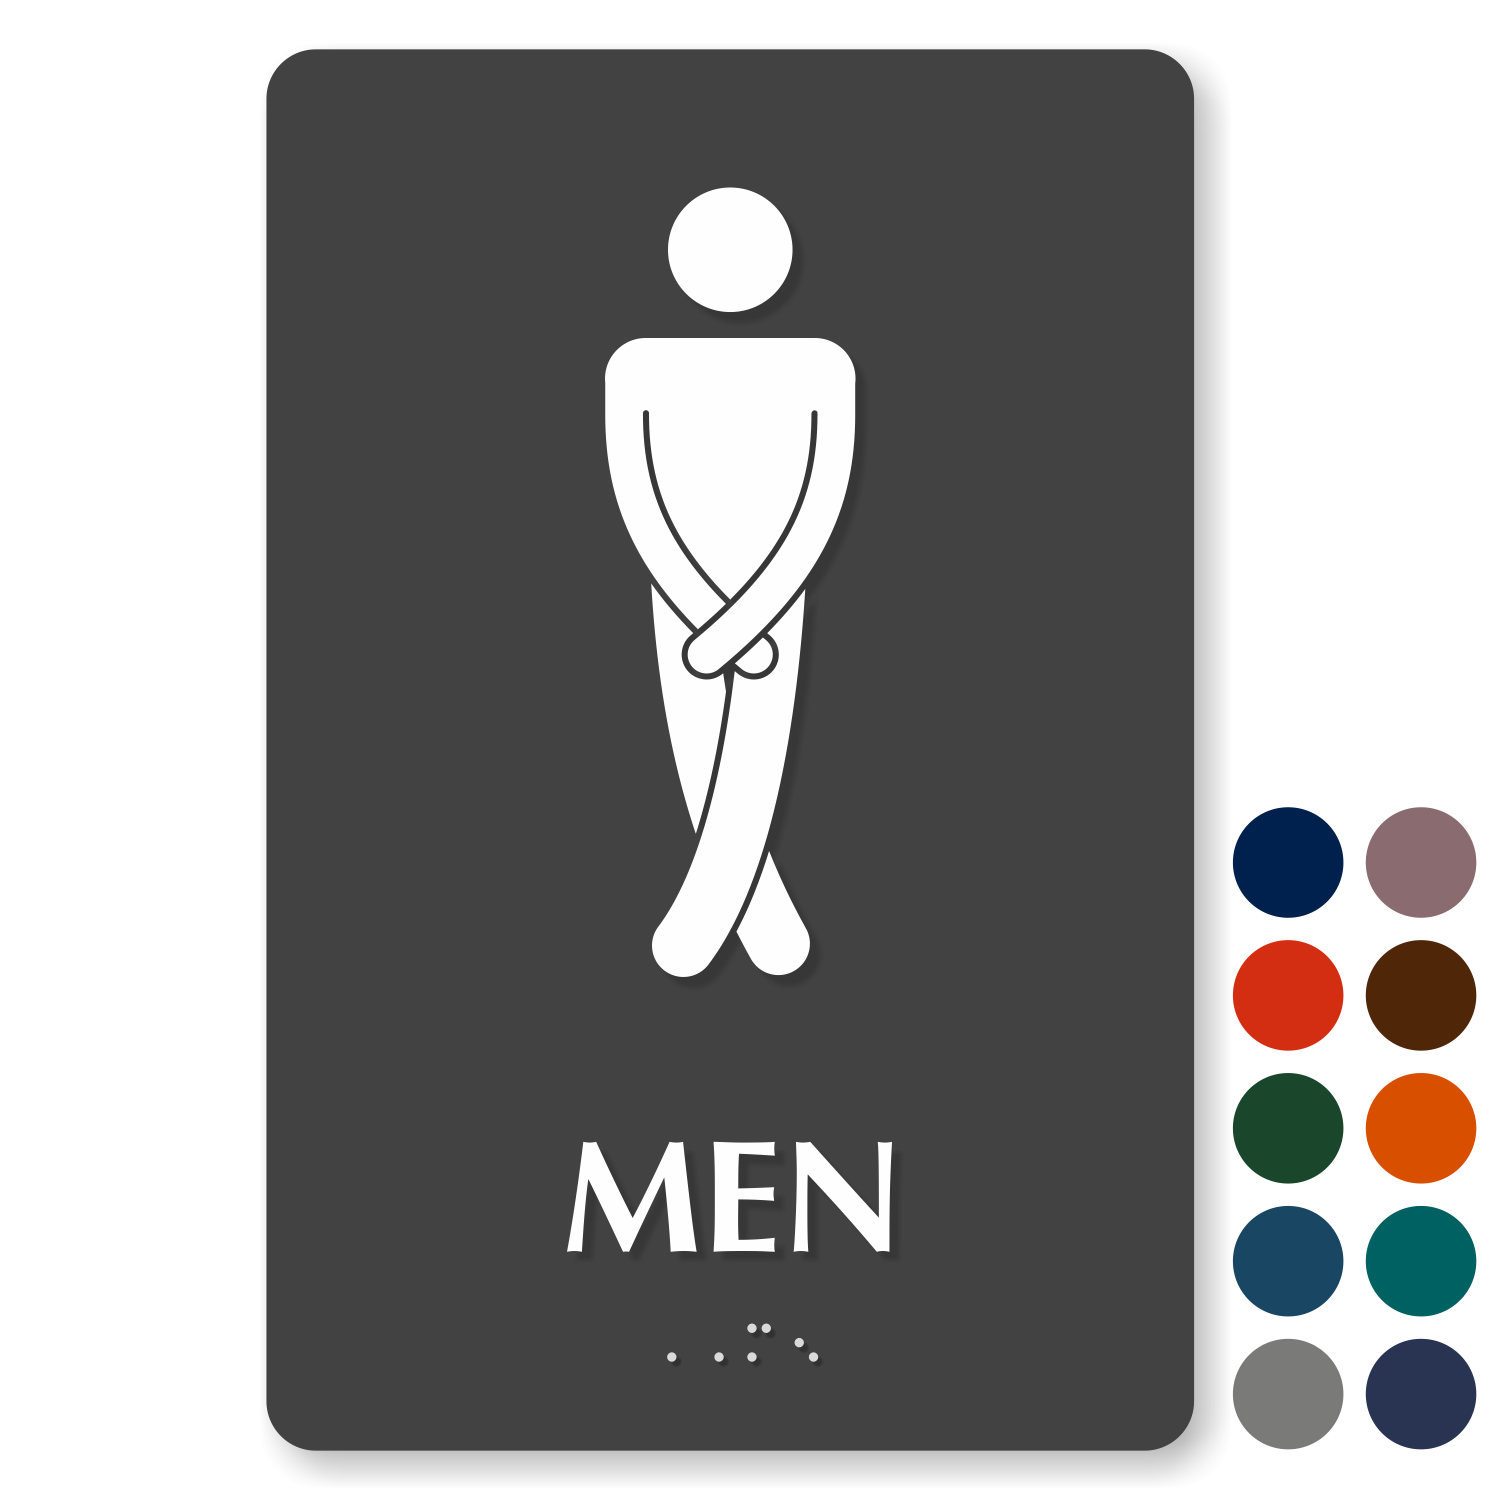 men bathroom symbol